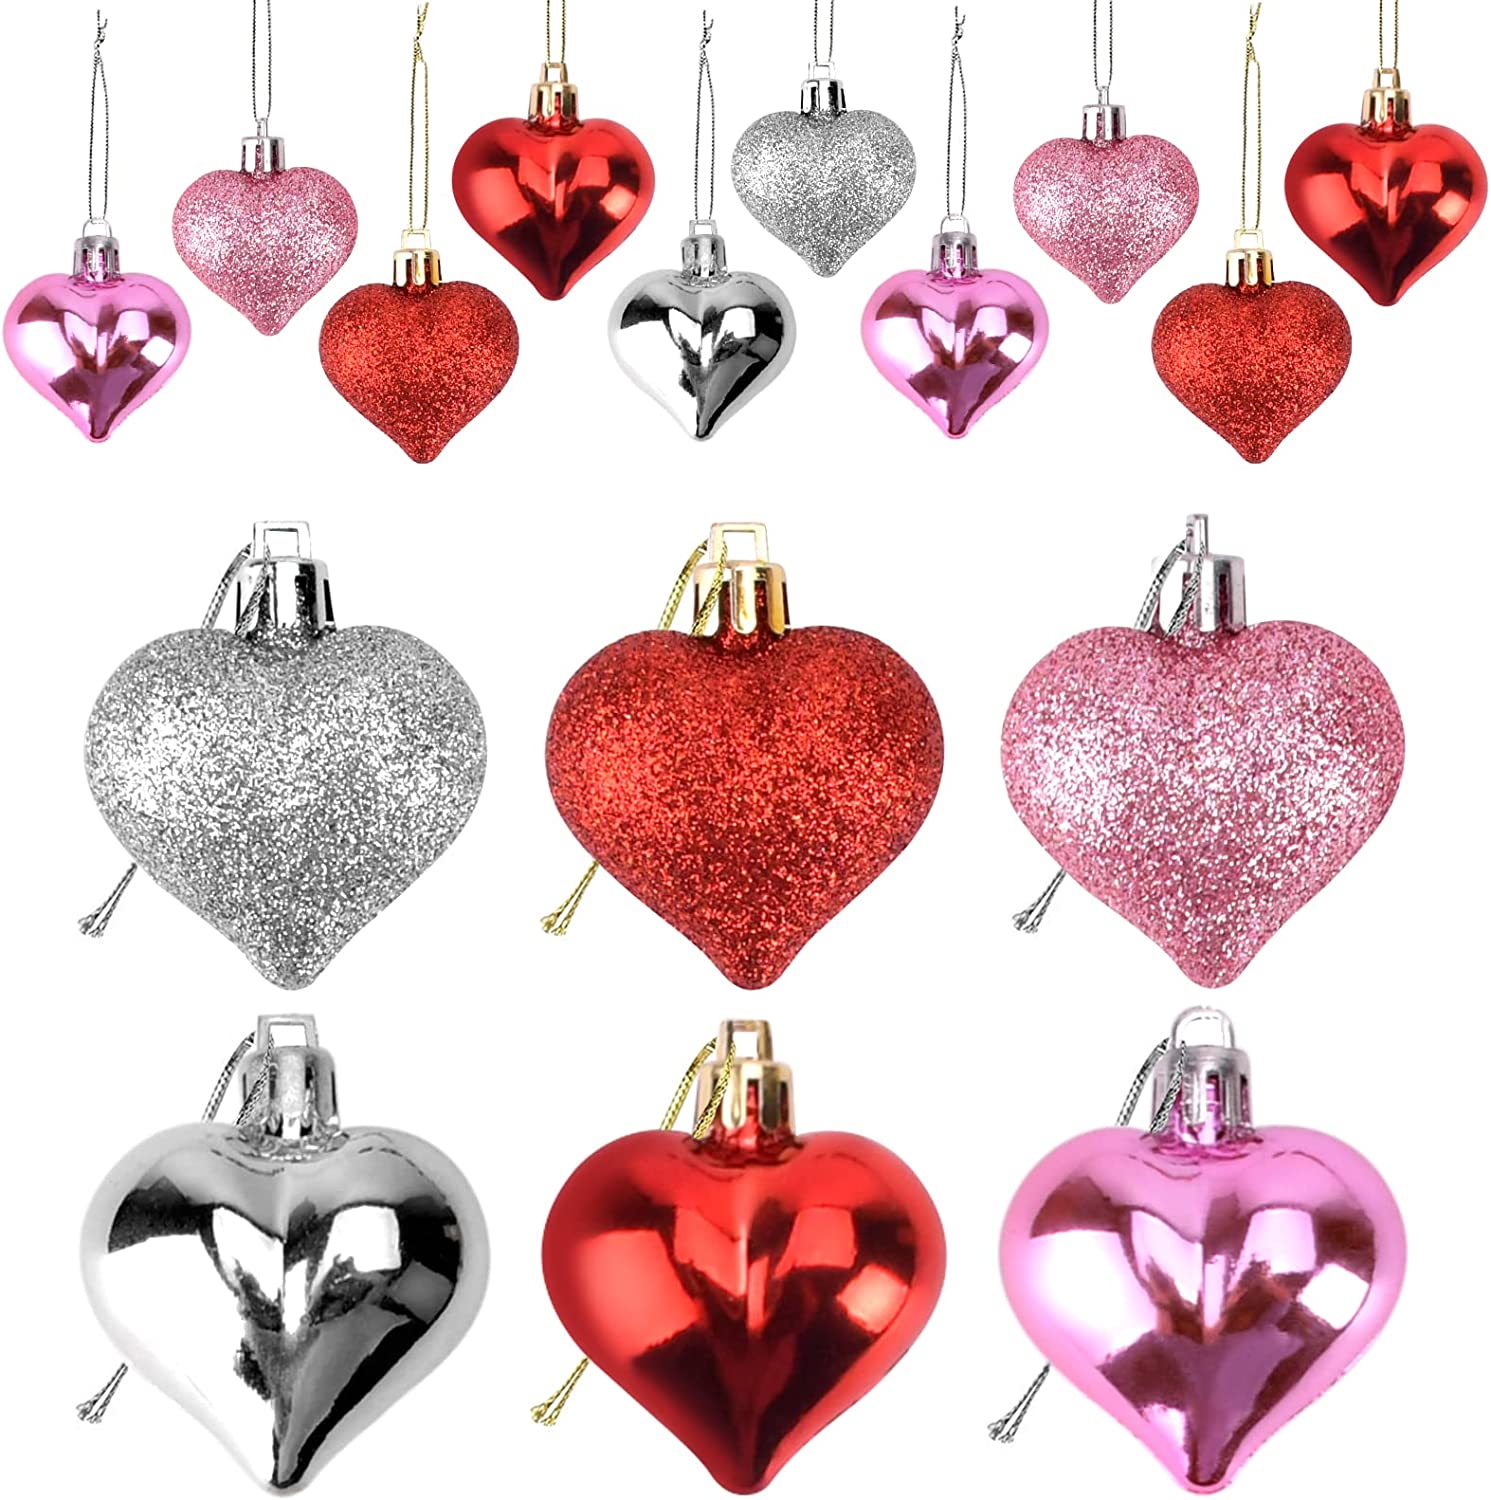 Hocis Heart Ornaments Valentines Day Decor, 24-Piece